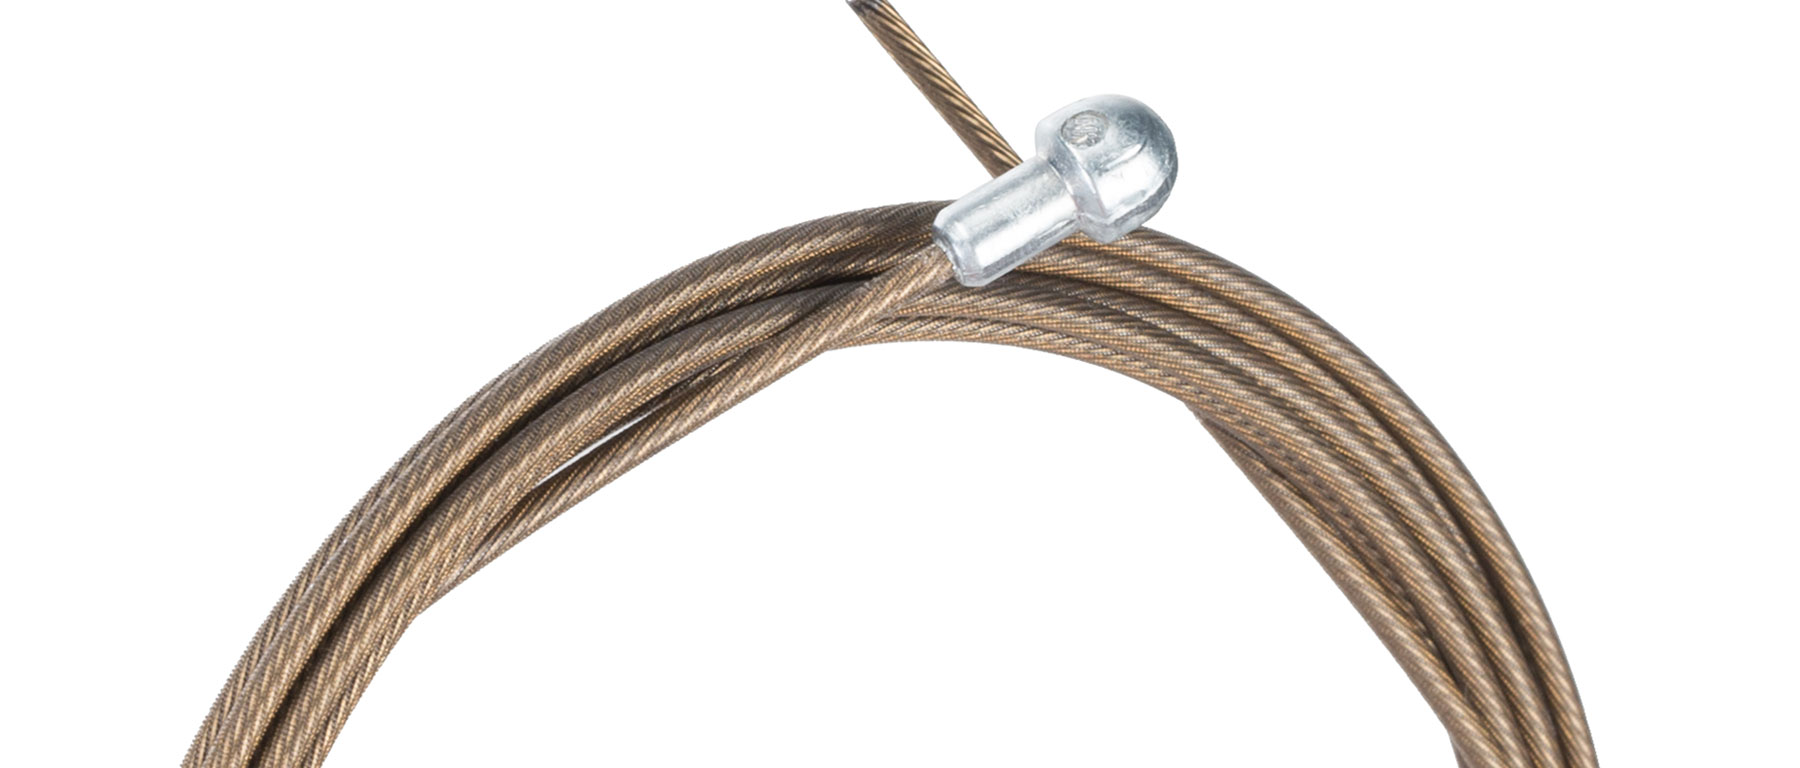 Shimano BC-9000 Polymer Coated Road Brake Cable